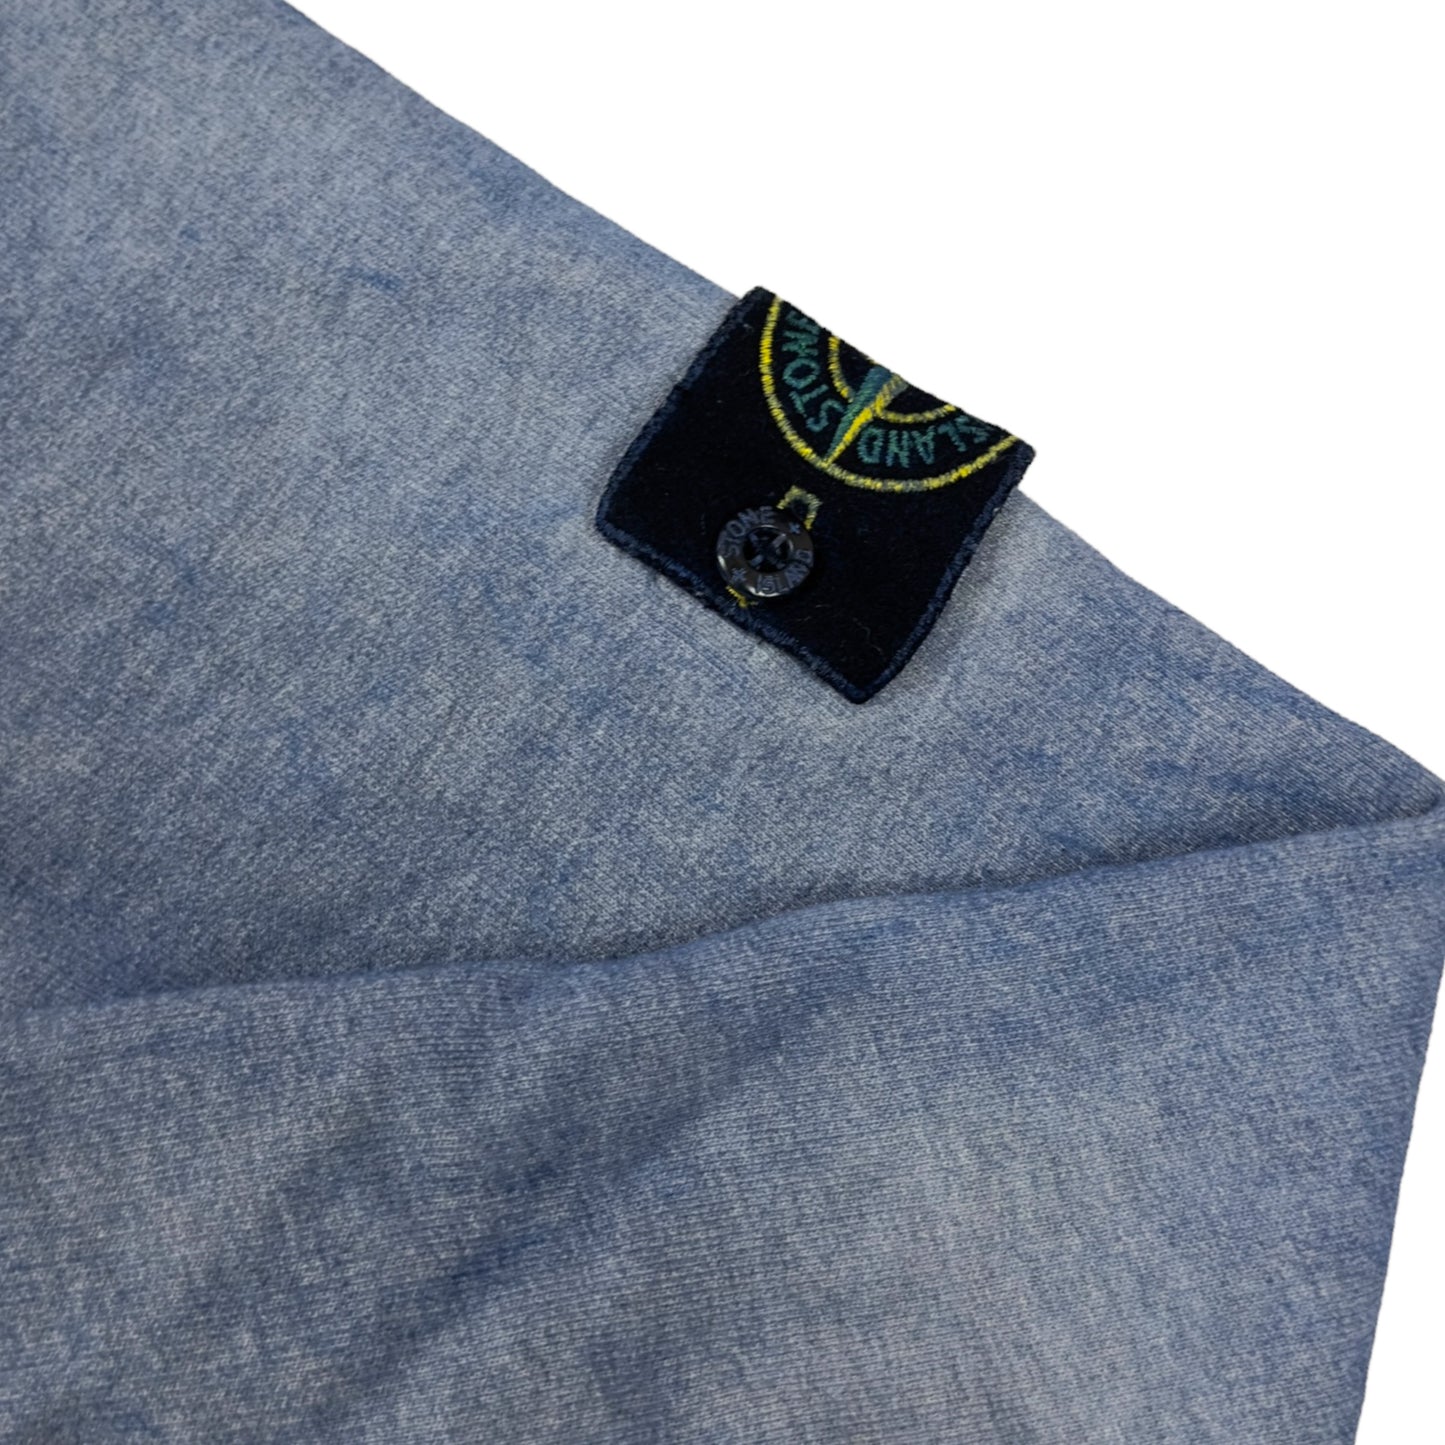 A/W 20 Stone Island Dust Colour Treatment Sweater - Grey/Blue